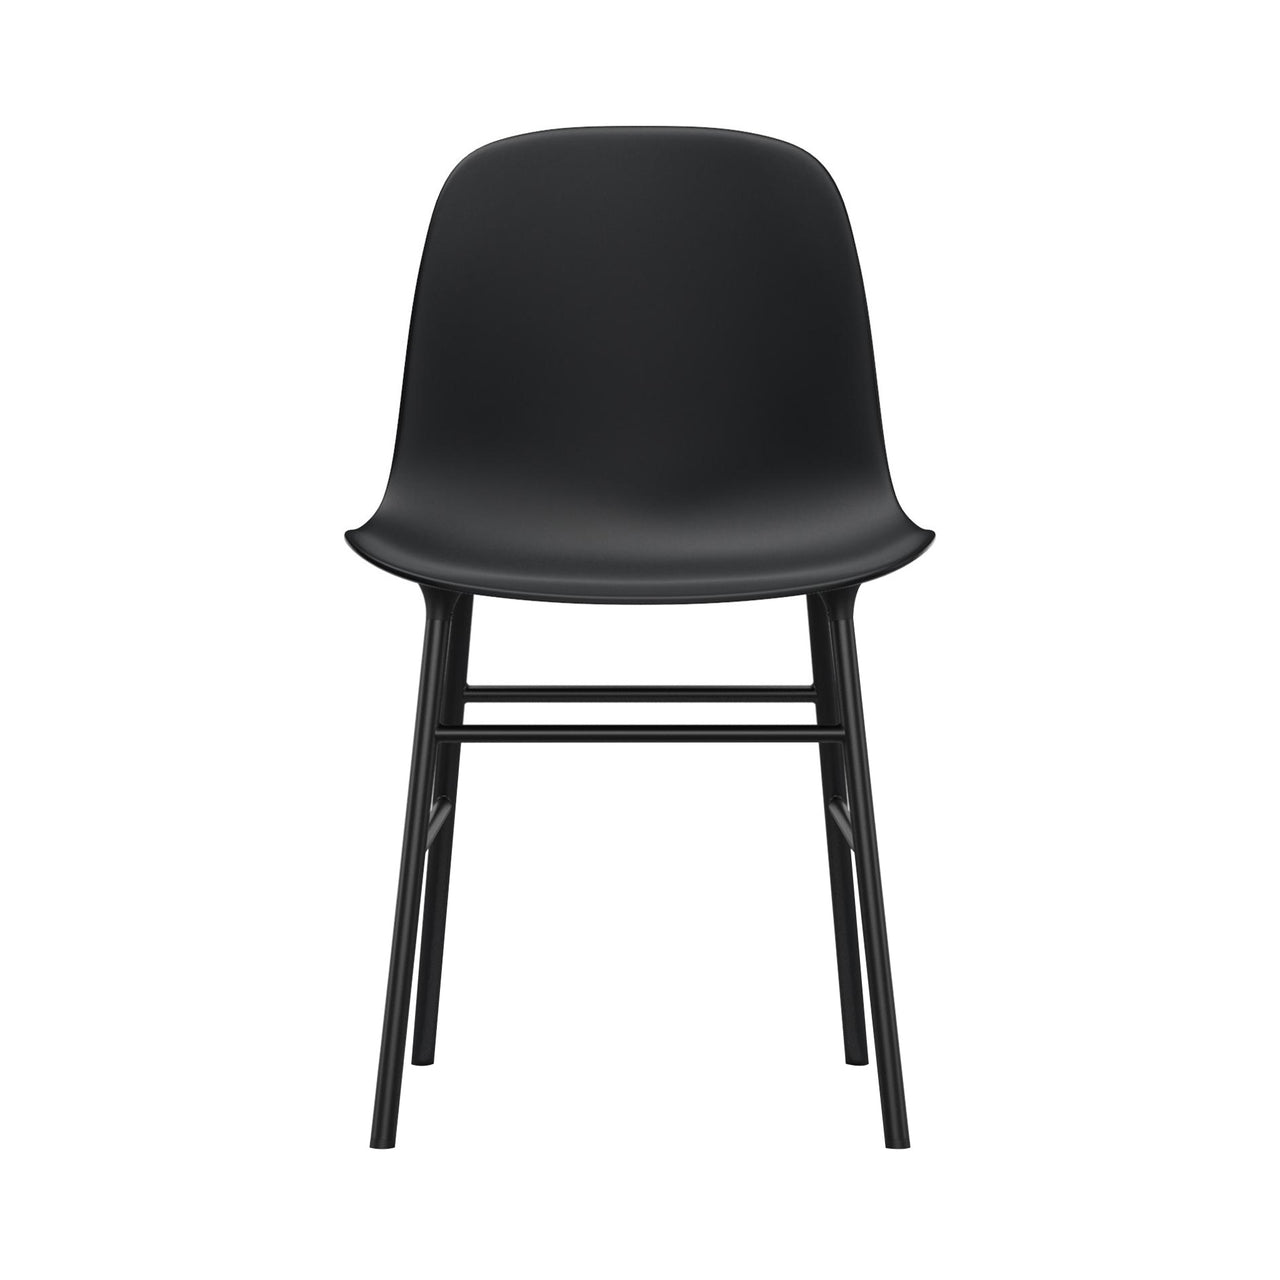 Form Chair: Steel + Black